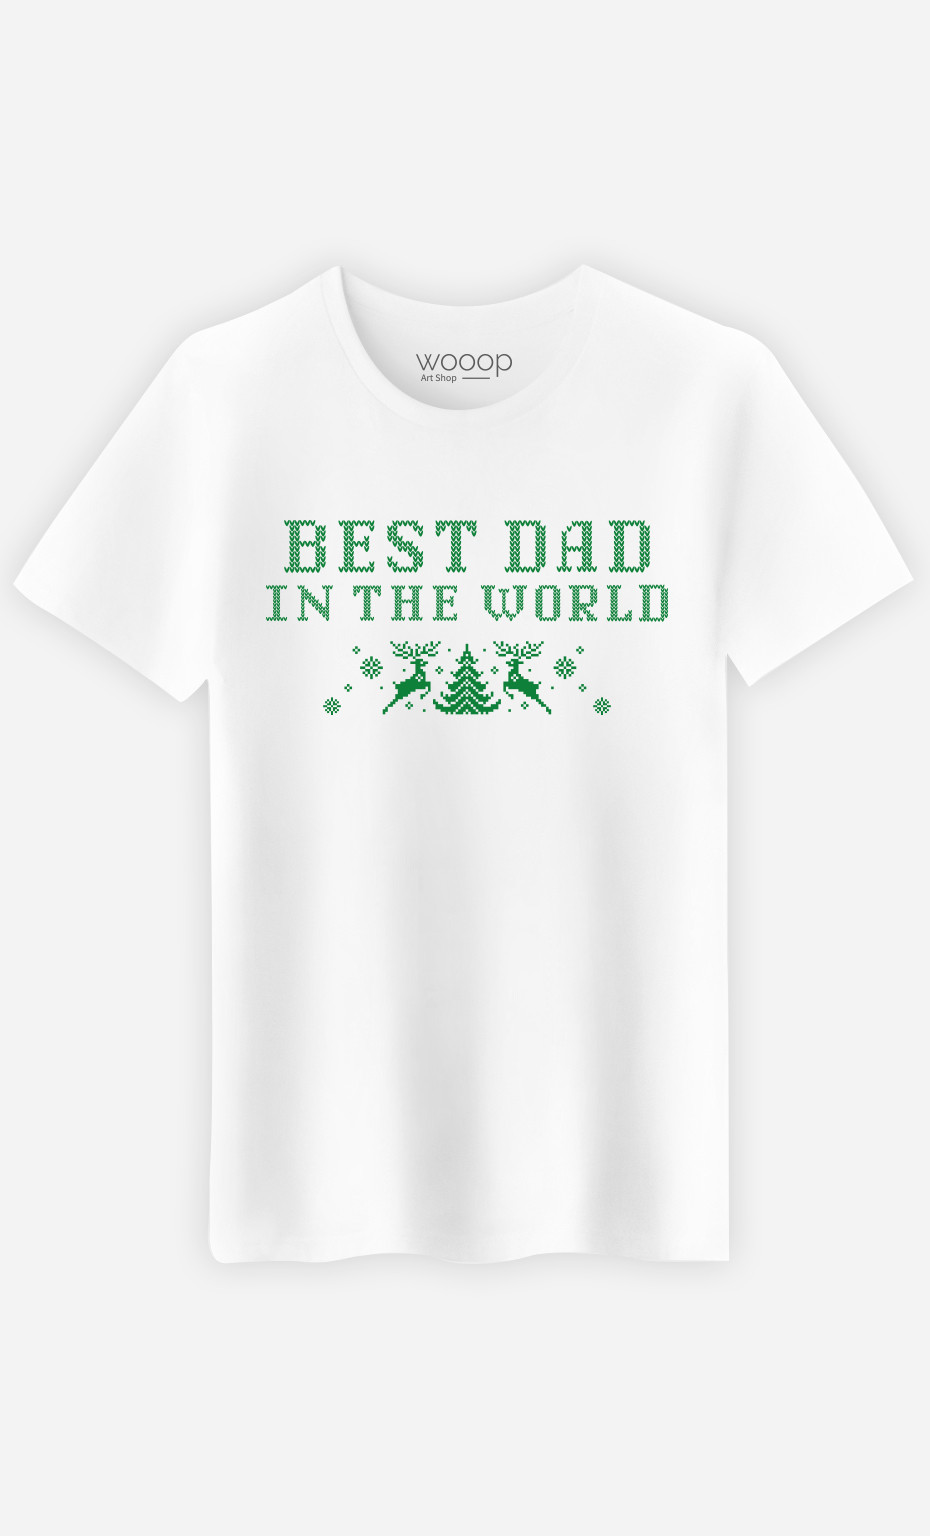 T-Shirt Man Best Dad In The World